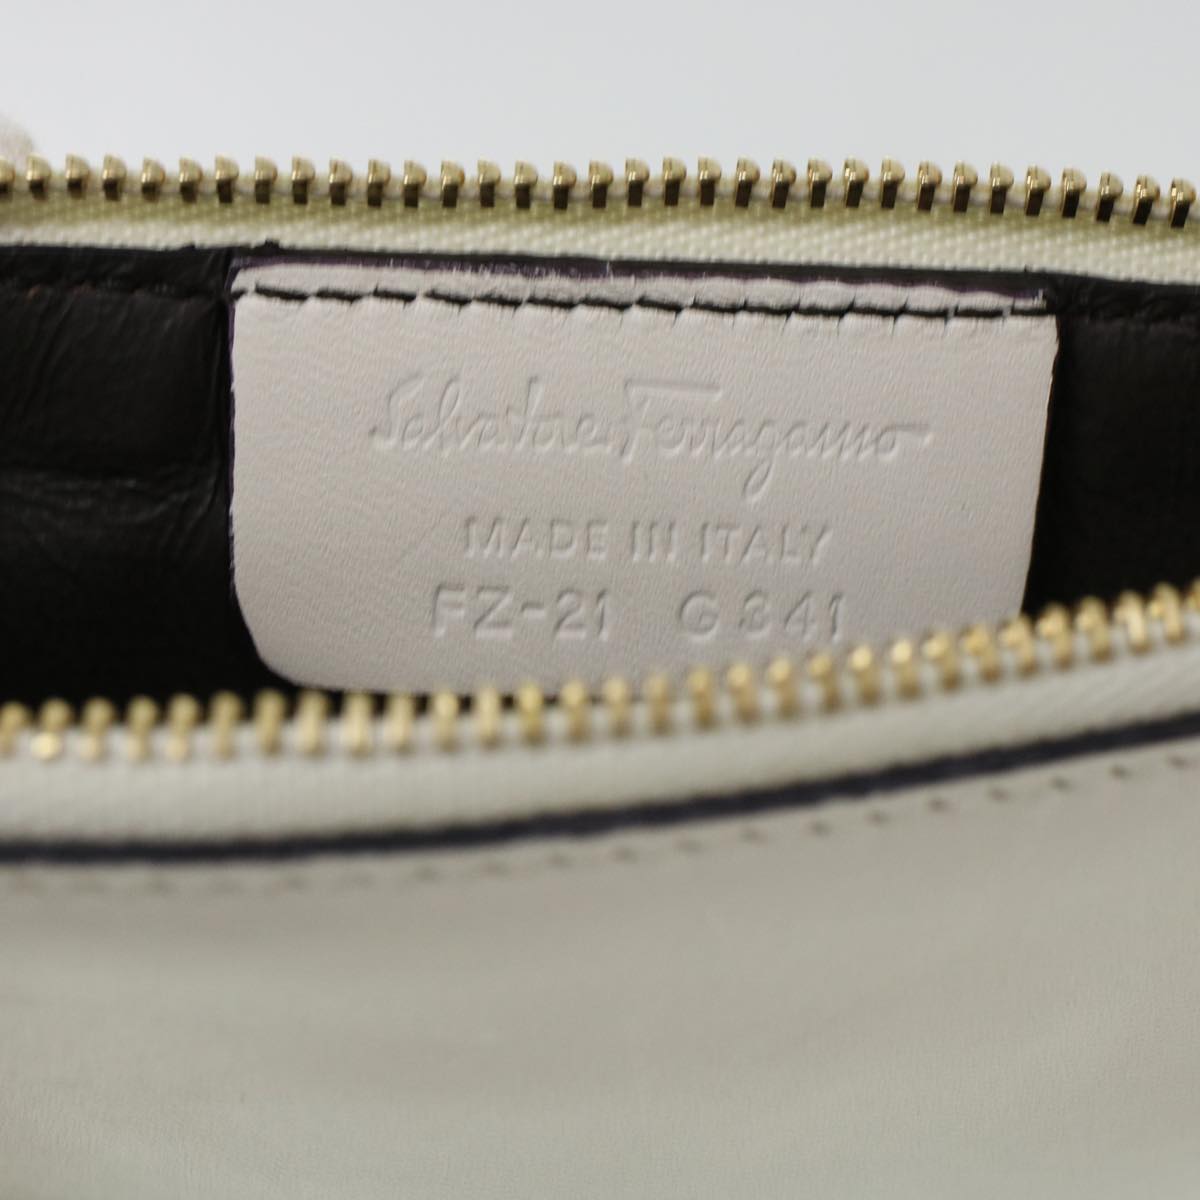 Salvatore Ferragamo Sofia Hand Bag Leather 2way White FZ-21 G341 Auth 43859